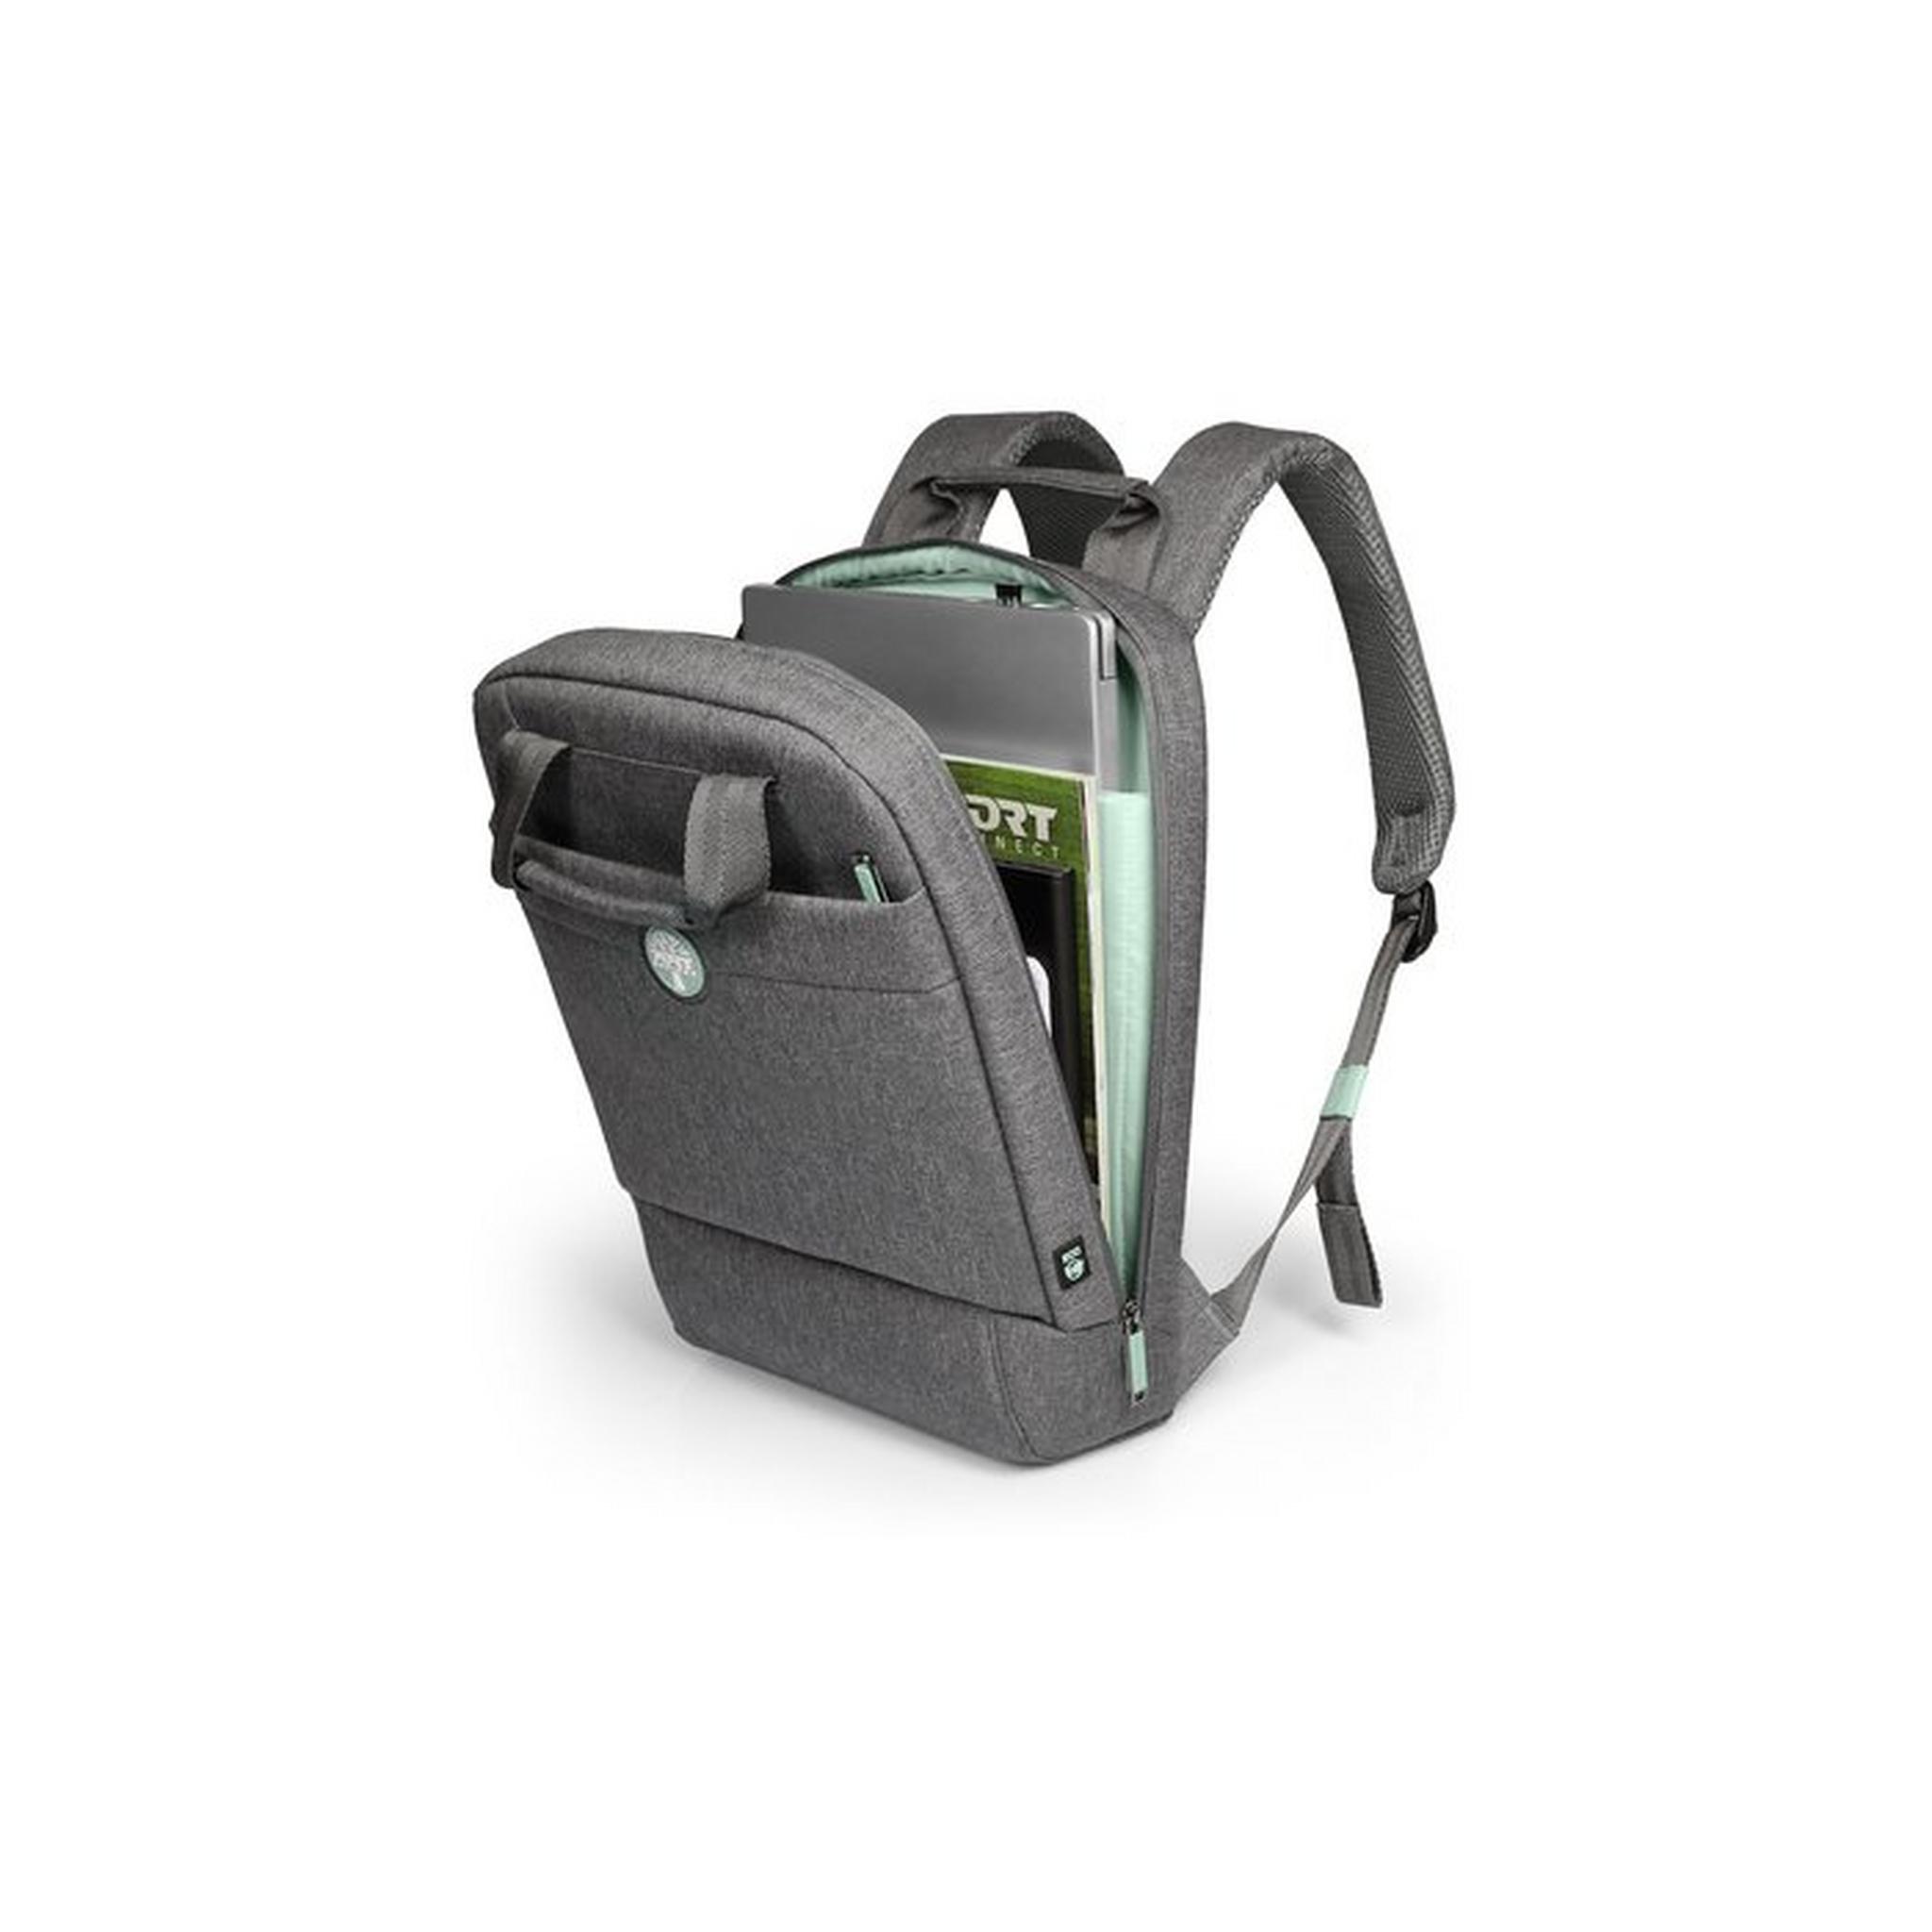 Port Yosemite Eco laptop Backpack, 13-14 inch, 400702 - Grey